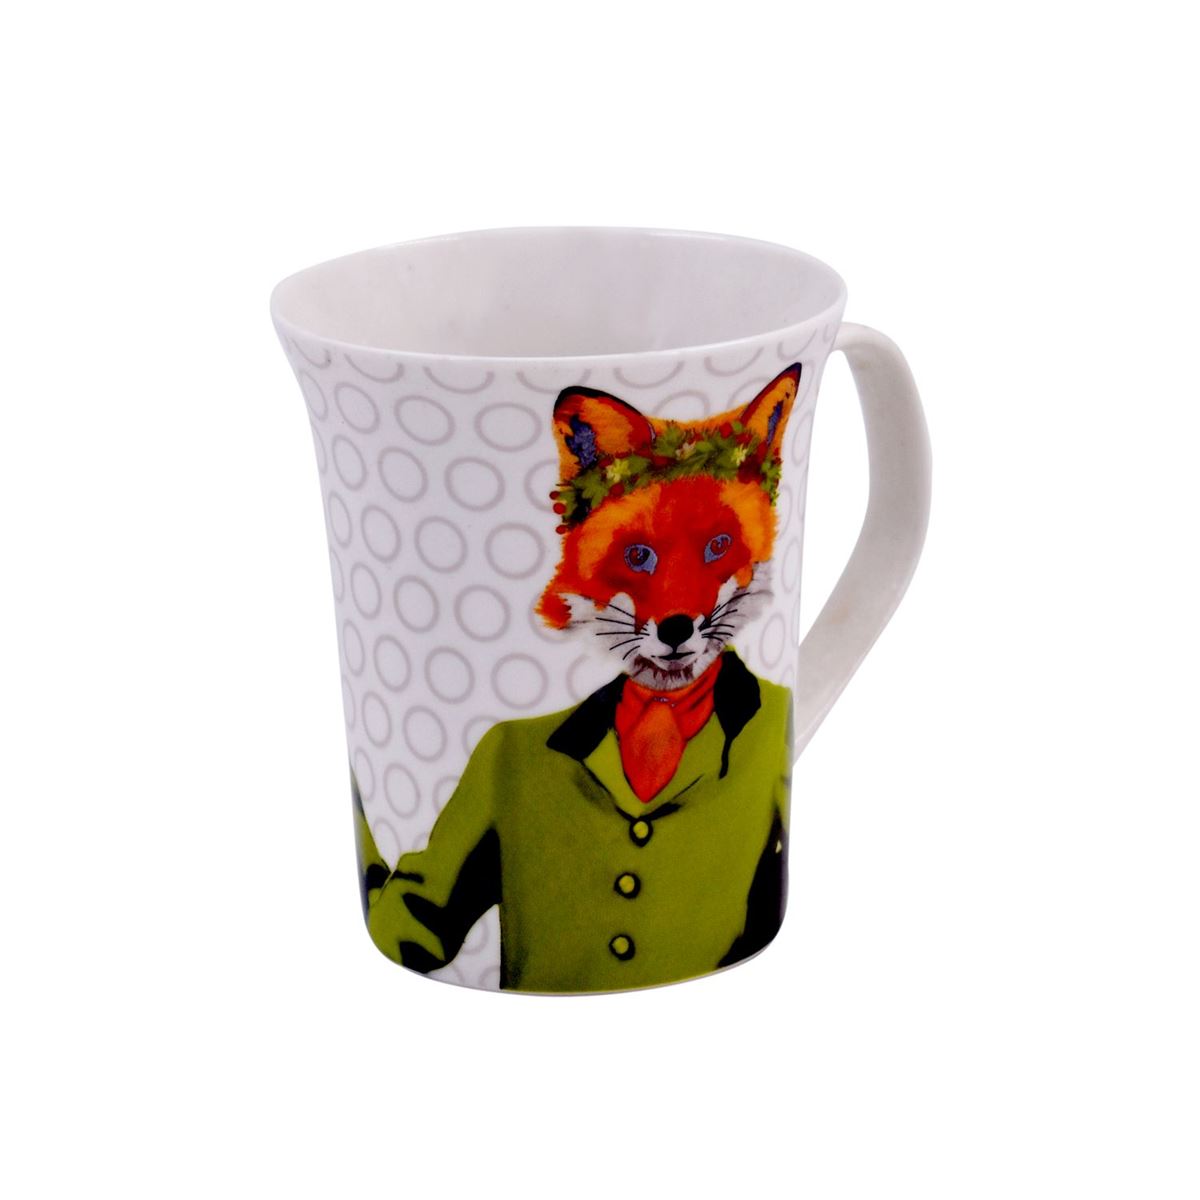 Printed Ceramic Tall Coffee or Tea Mug with handle - 325ml (4019C-C)